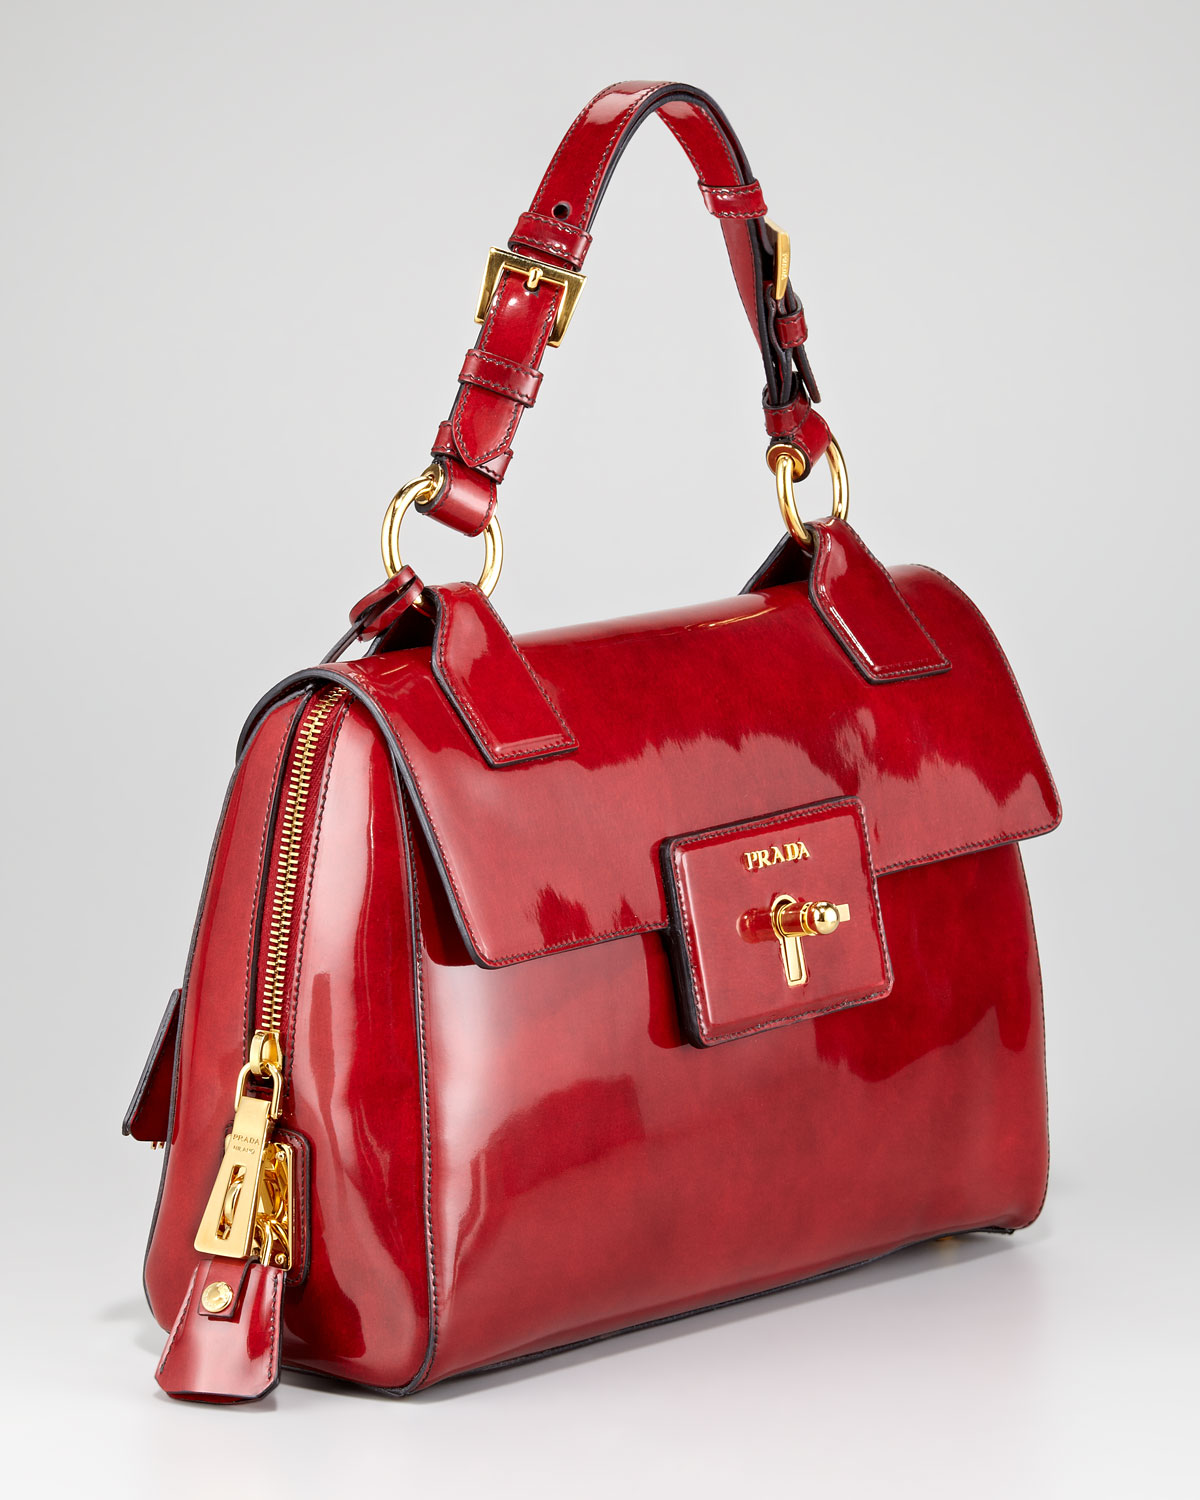 Prada Spazzolato Medium Shoulder Bag in Red - Lyst